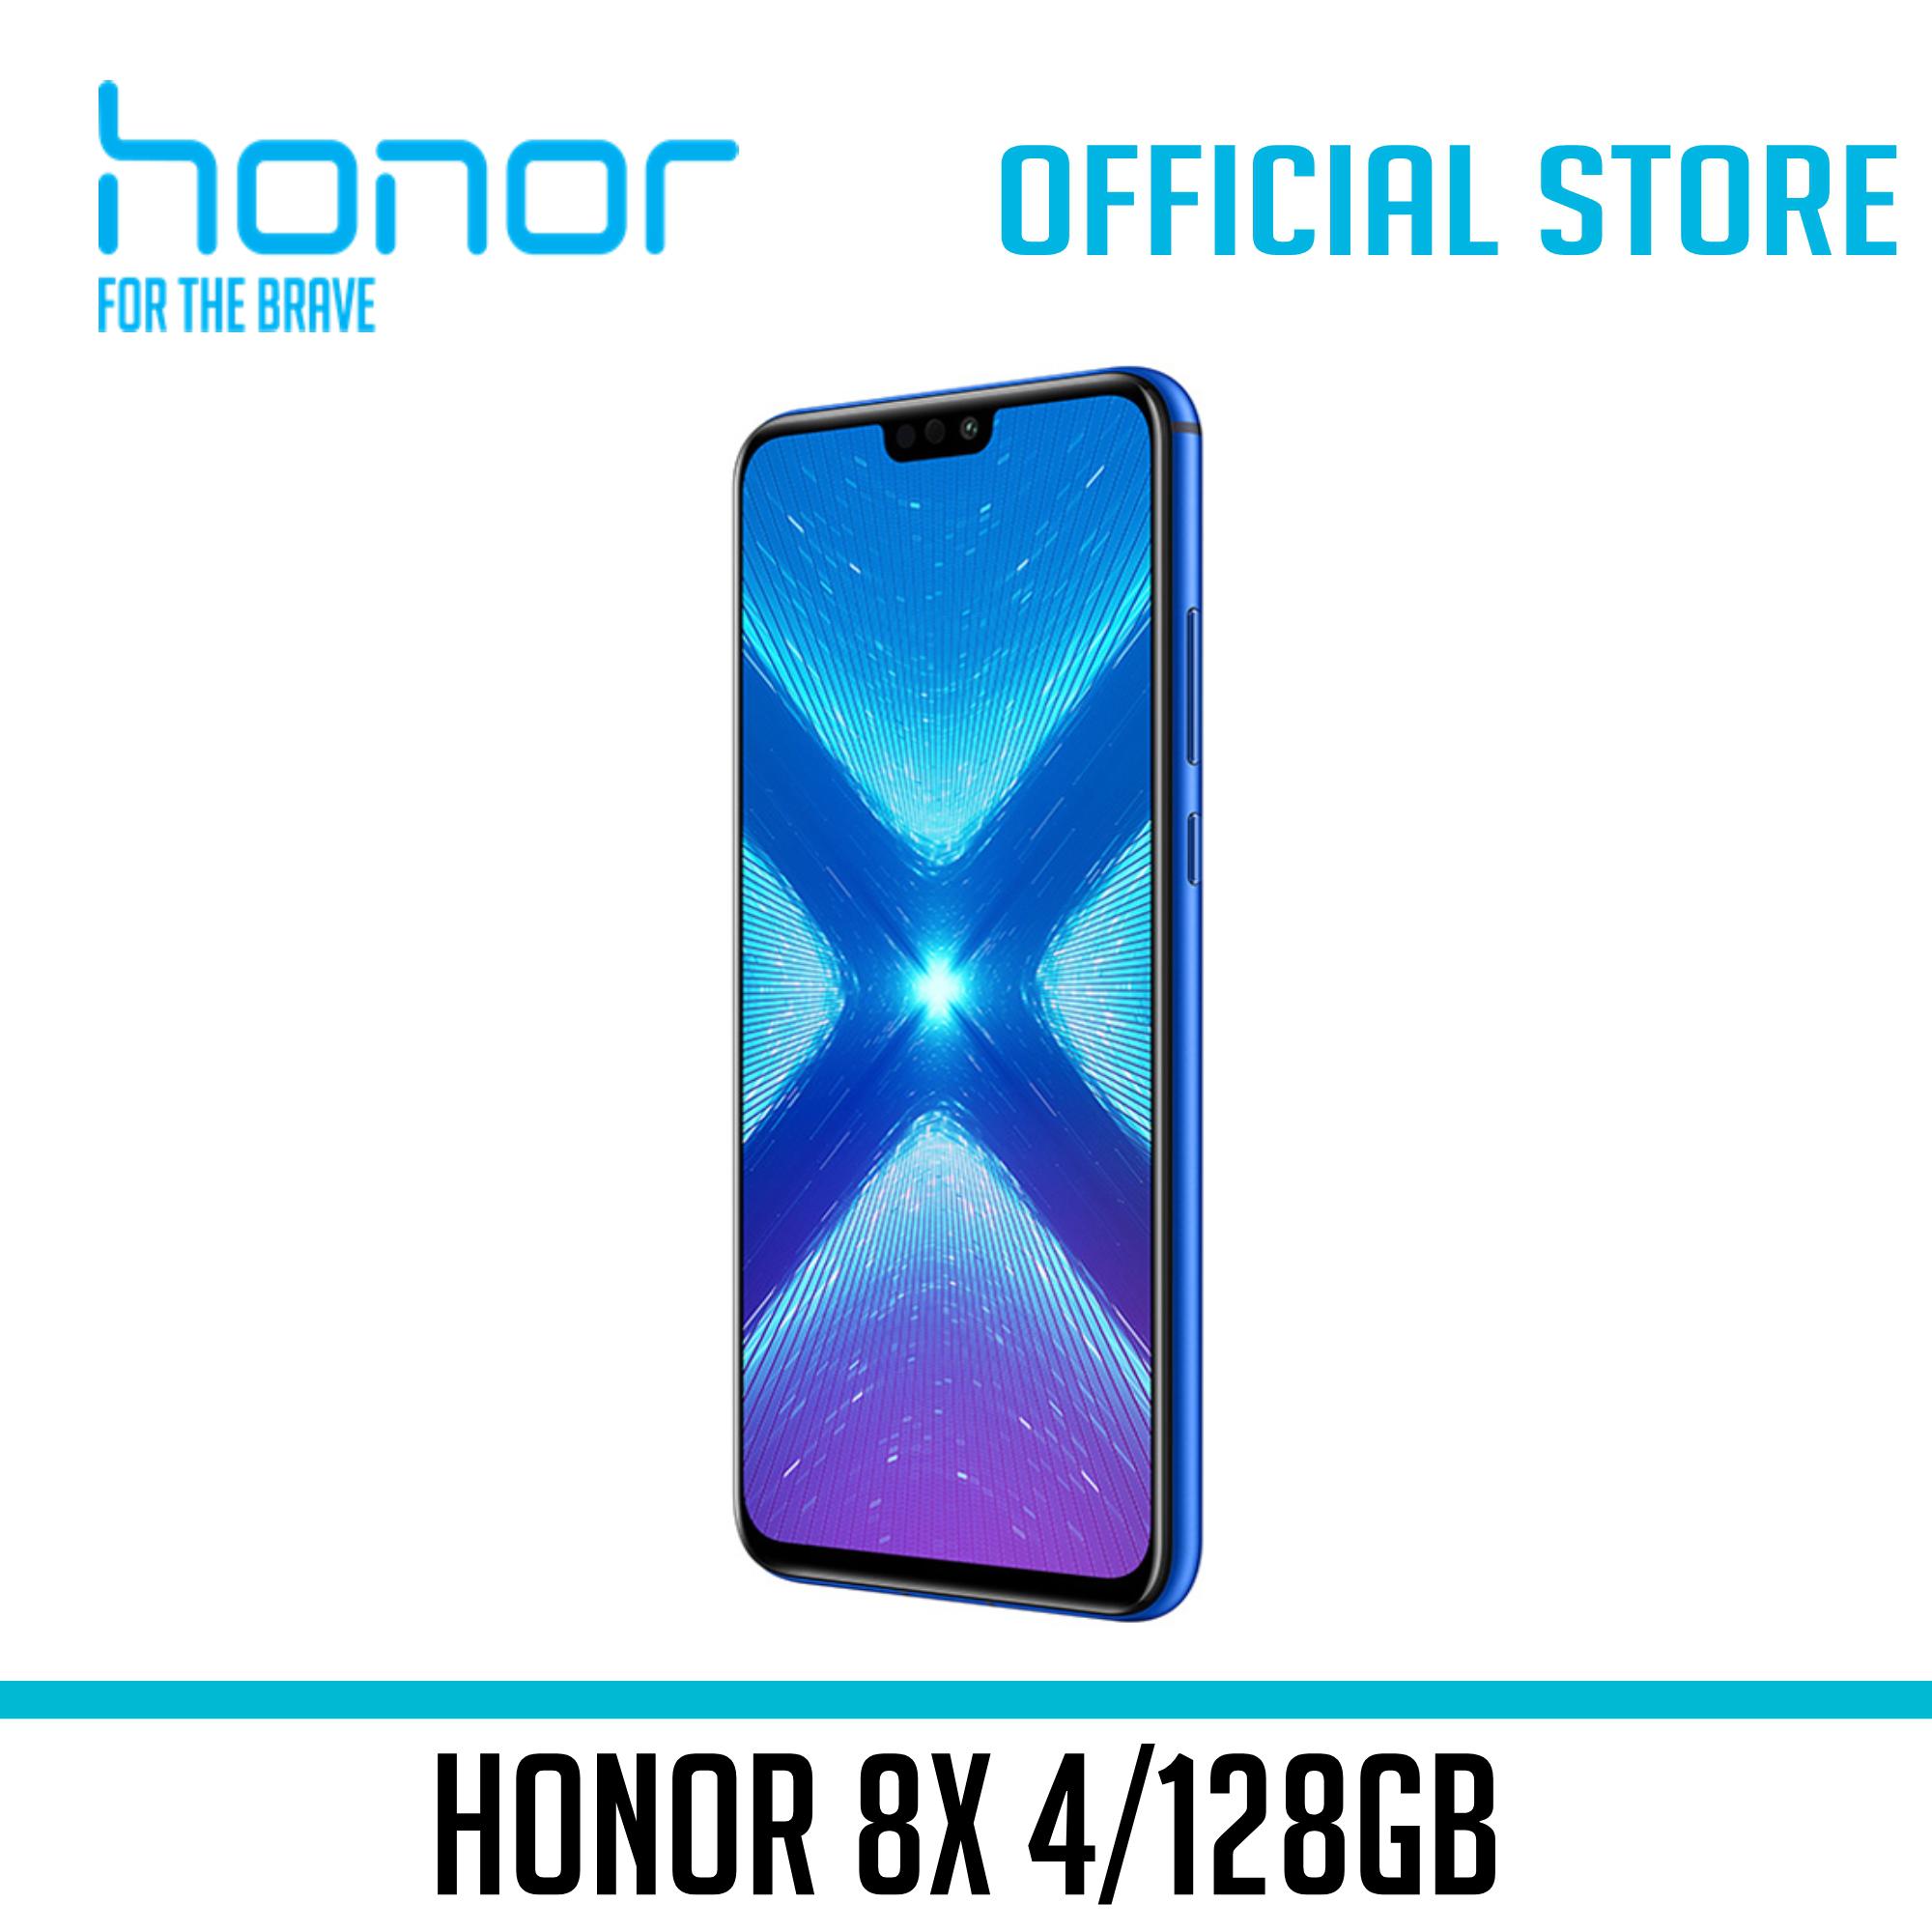 Honor 8X 4/128GB - Free 128GB MicroSD Card